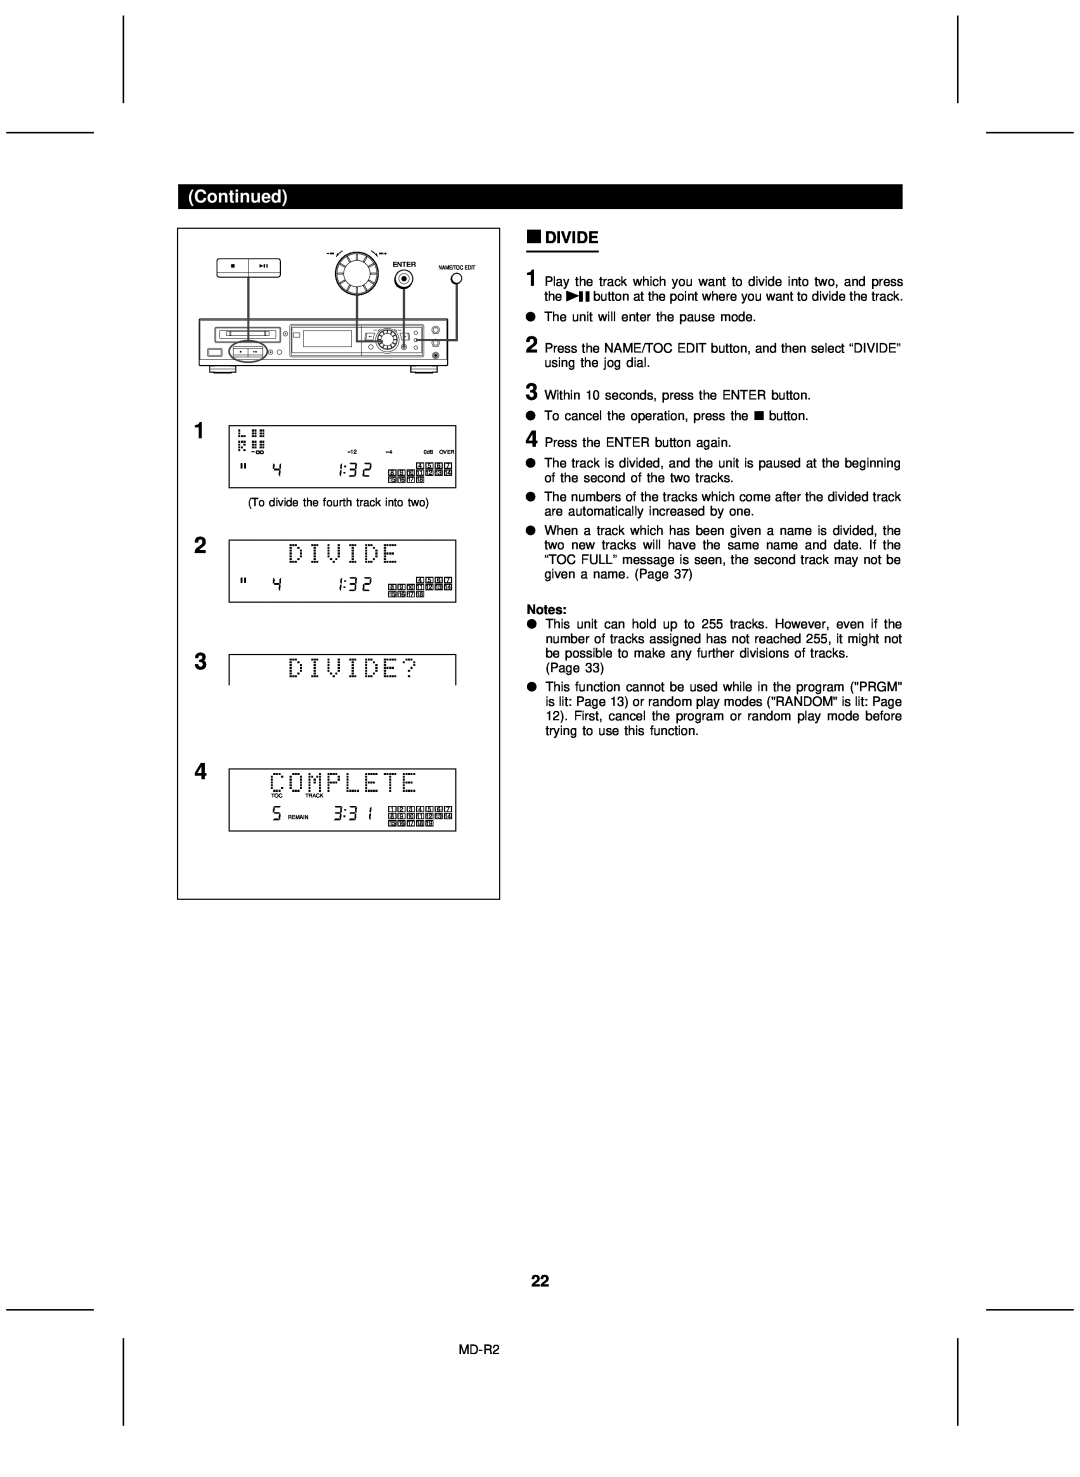 Kenwood MD-R2 operation manual Divide, Notes 